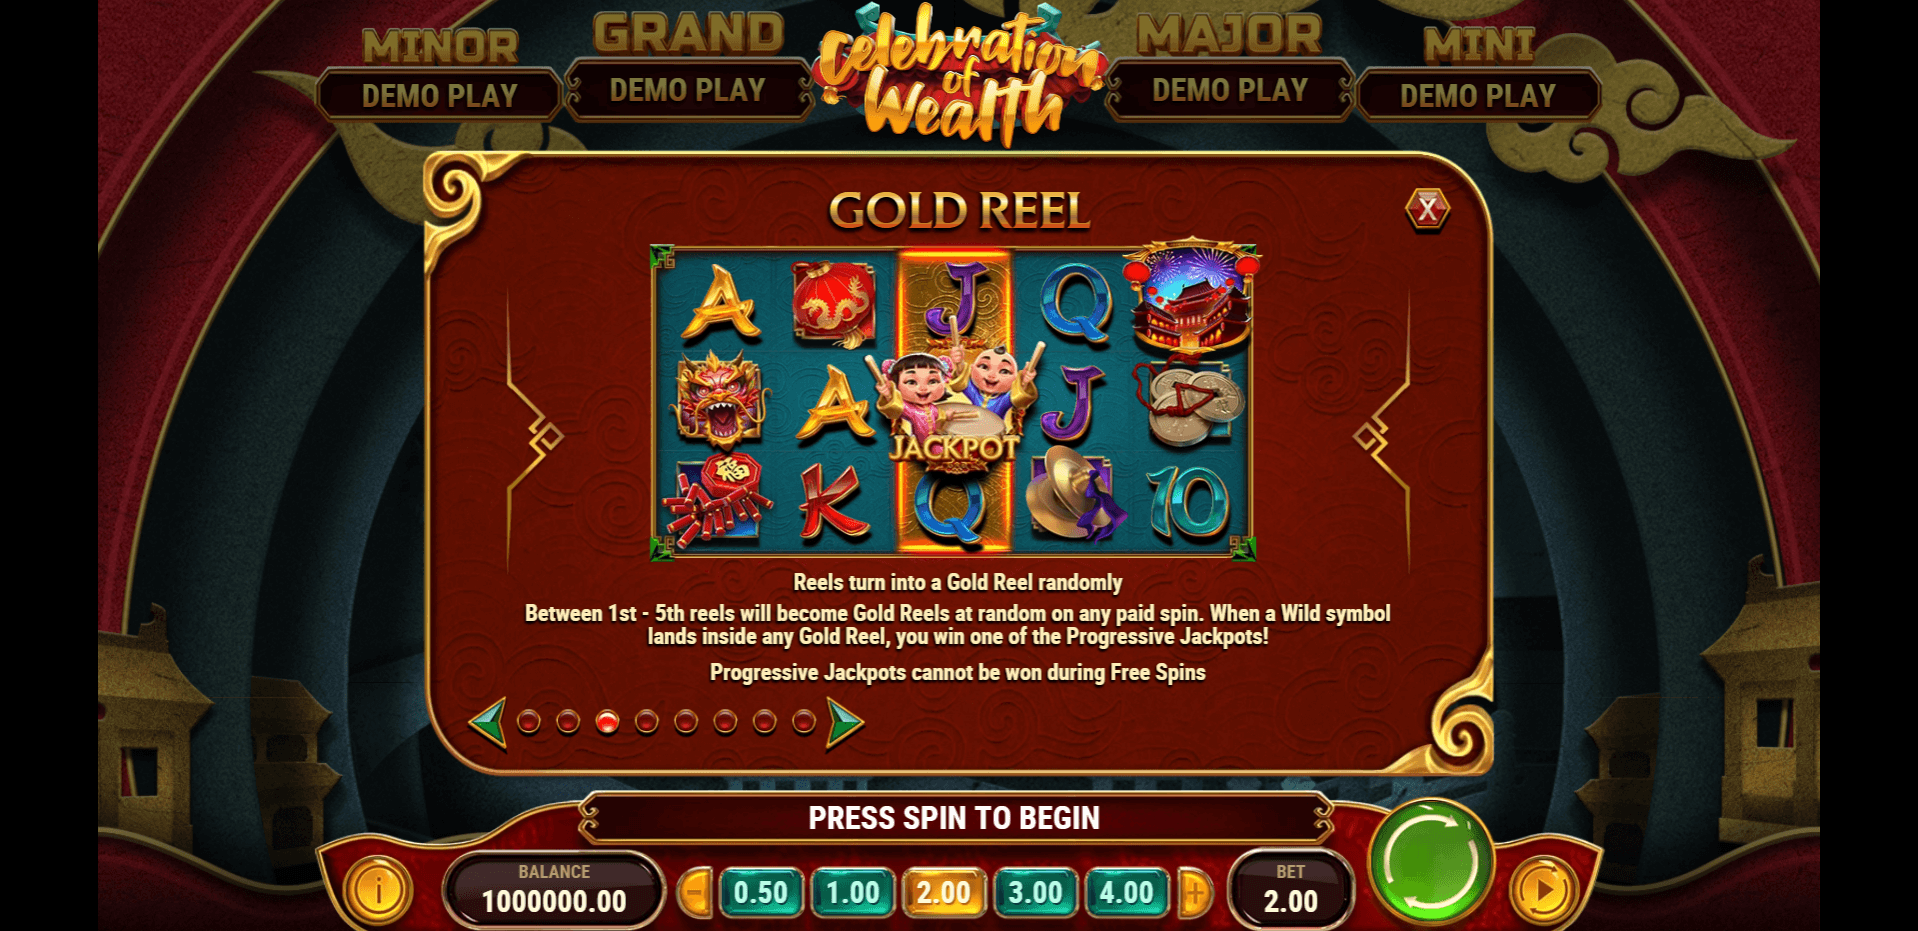 celebration of wealth slot machine detail image 2